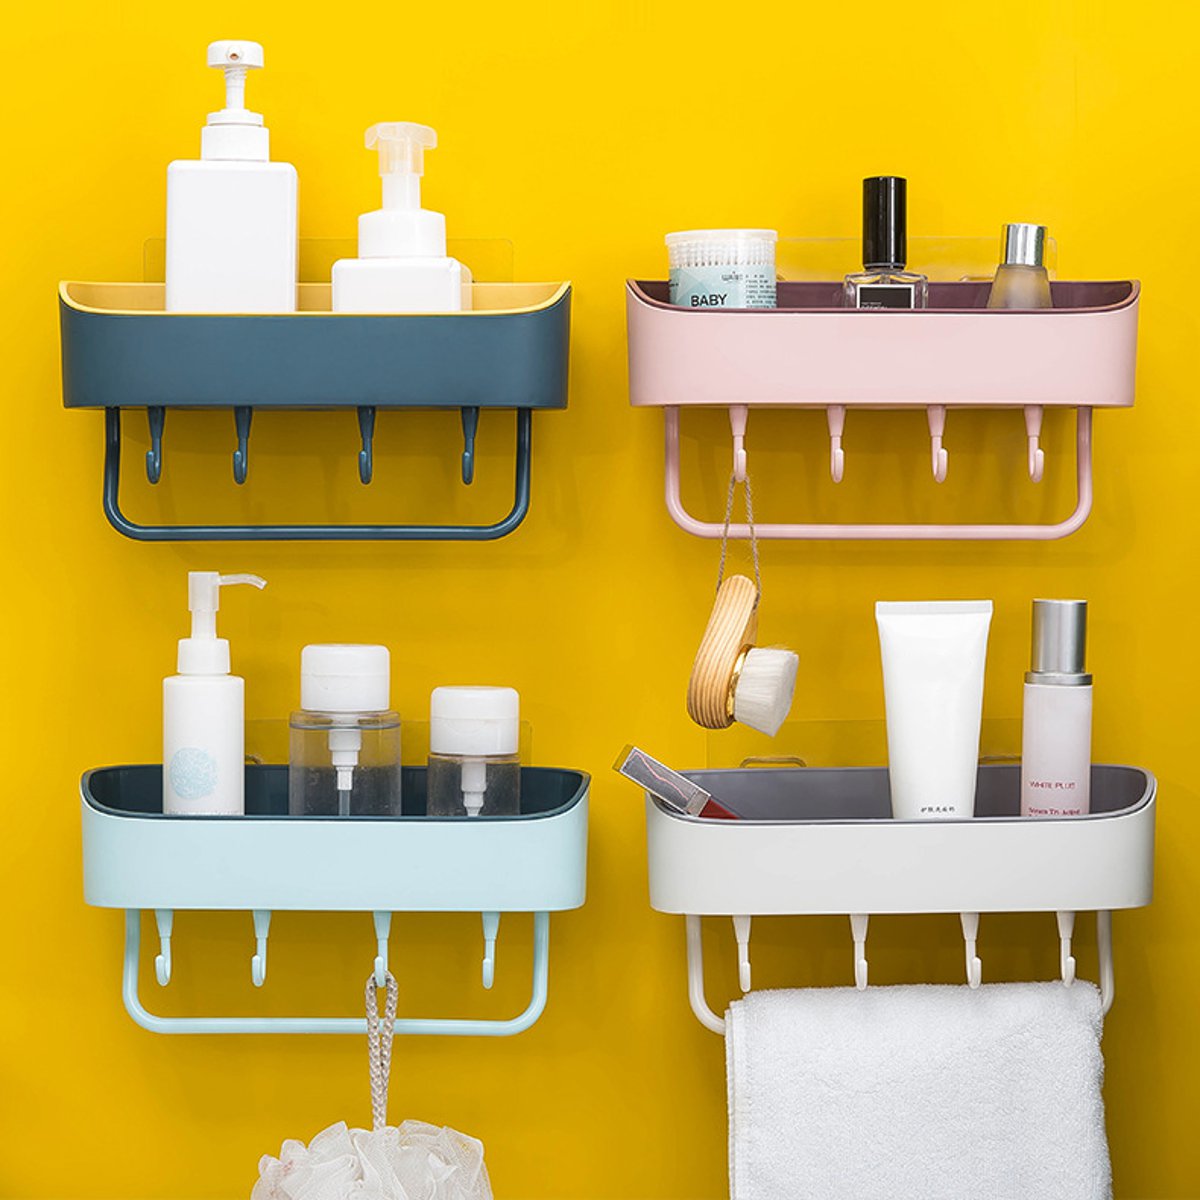 Self-adhesive-Wall-Hanging-Storage-Rack-Shelf-Hook-Home-Kitchen-Holder-Organizer-Towel-Holder-1552900-2